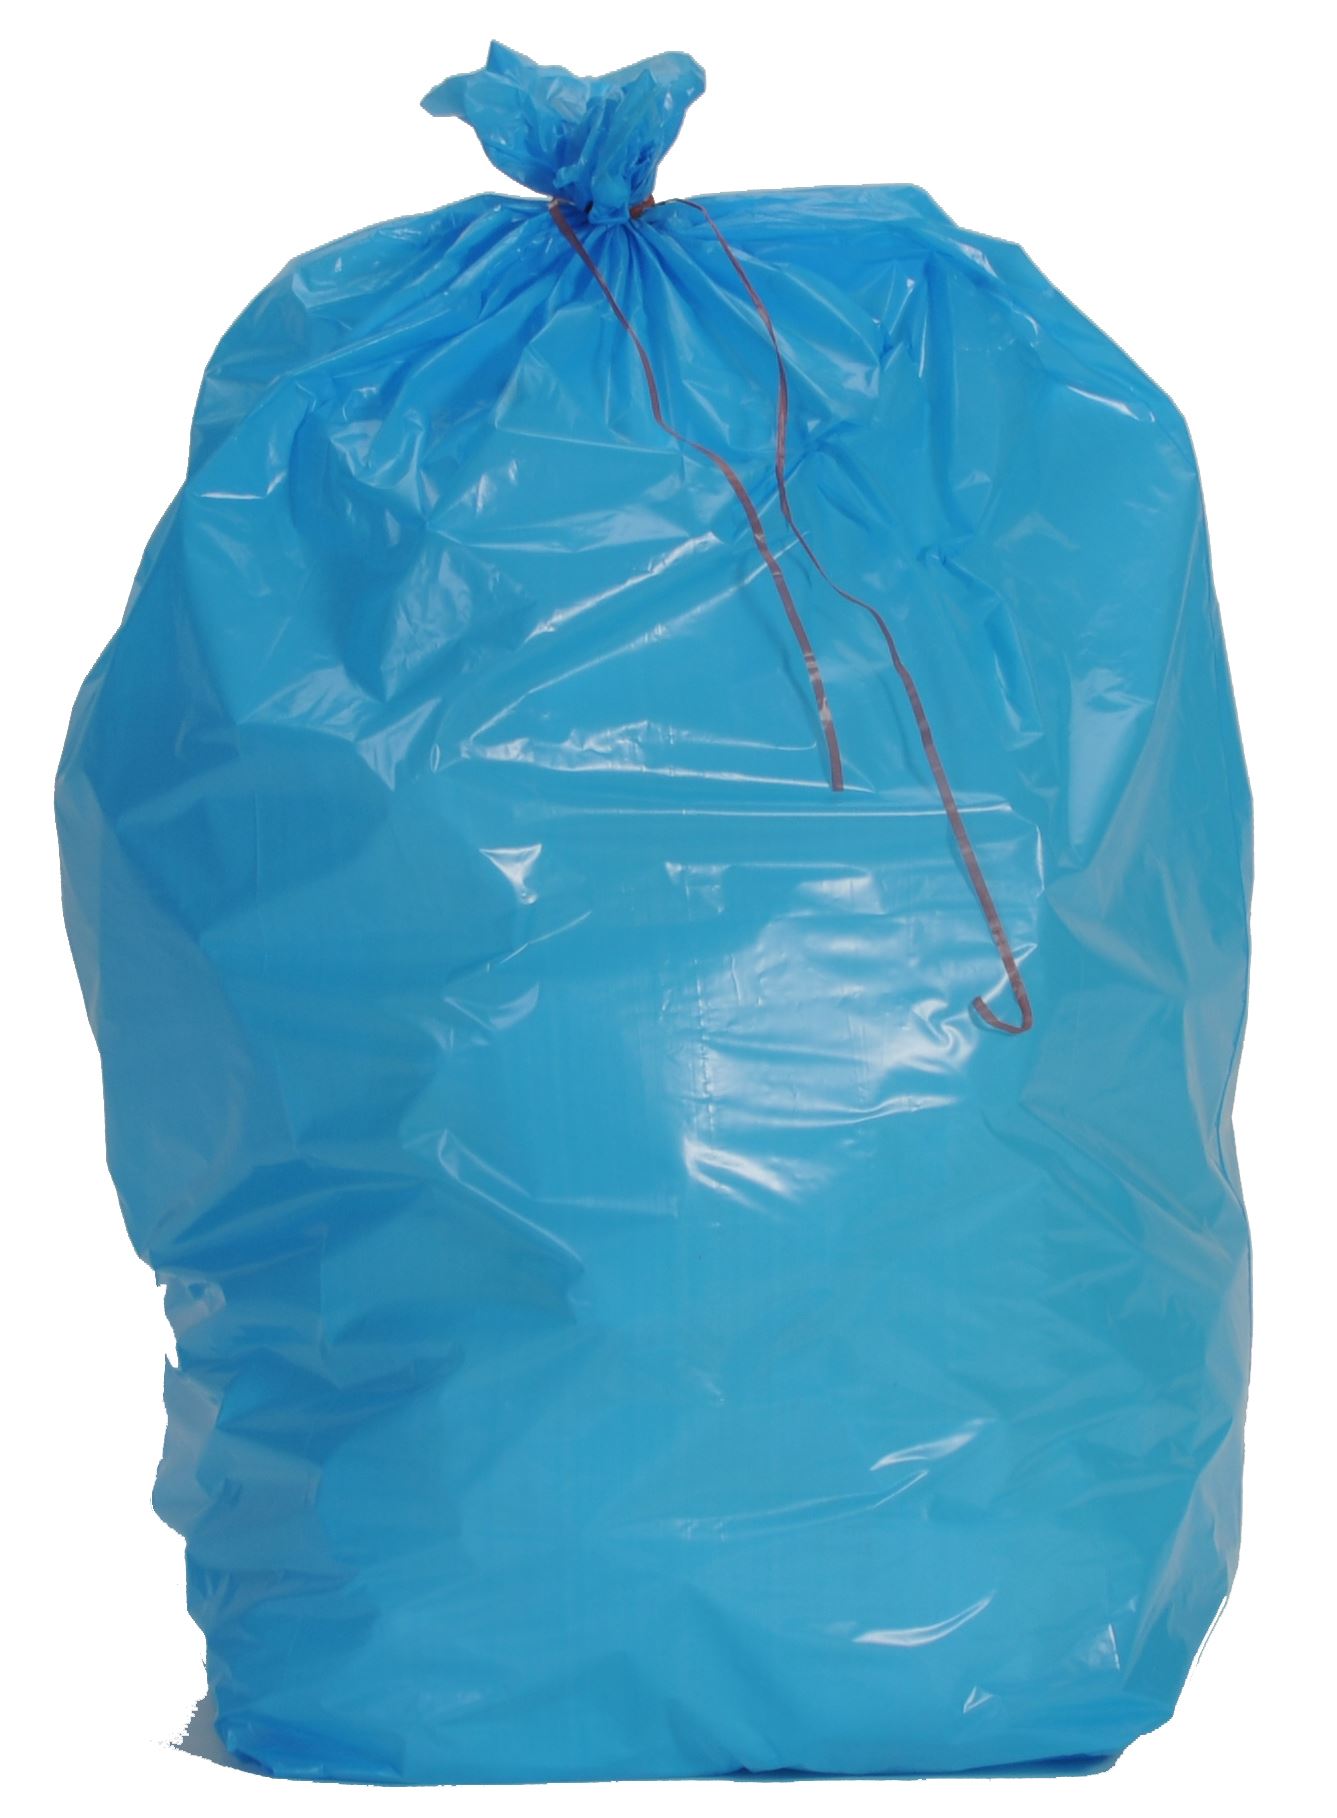 110l high density garbage bag - Voussert